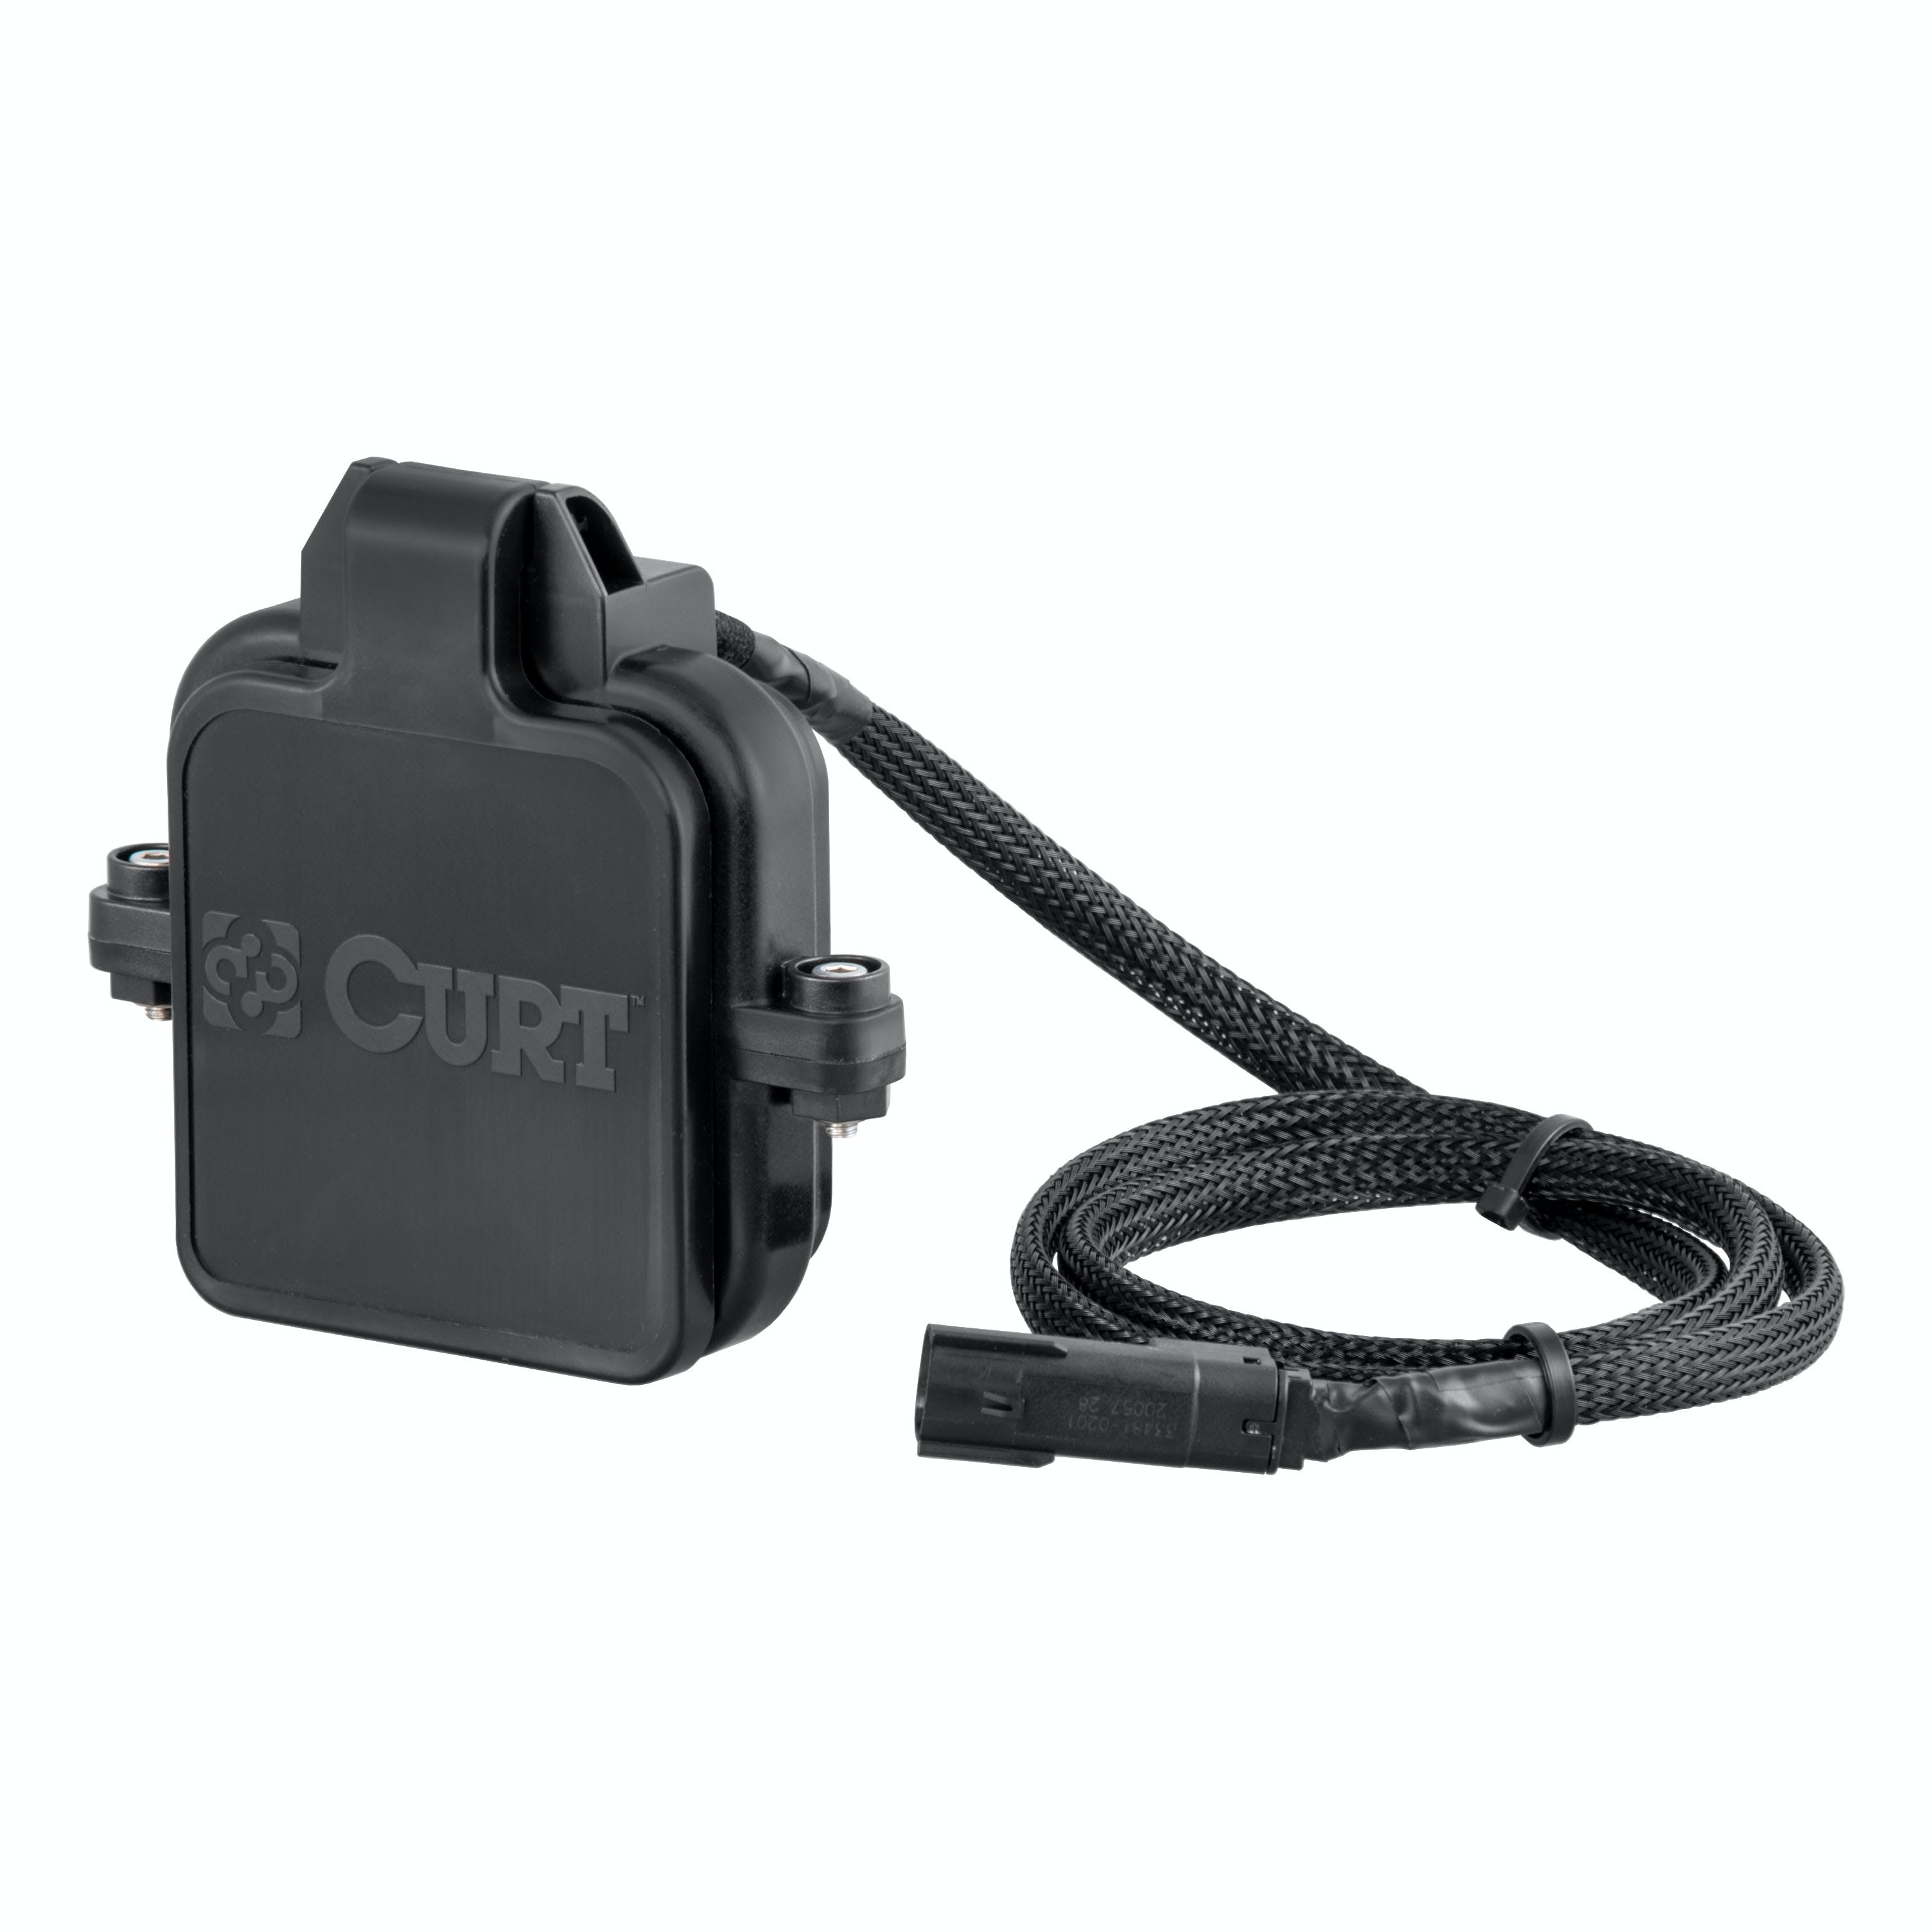 CURT 58266 Protective MultiPro / Multi-Flex Tailgate Sensor with 2-1/2 Hitch Cap